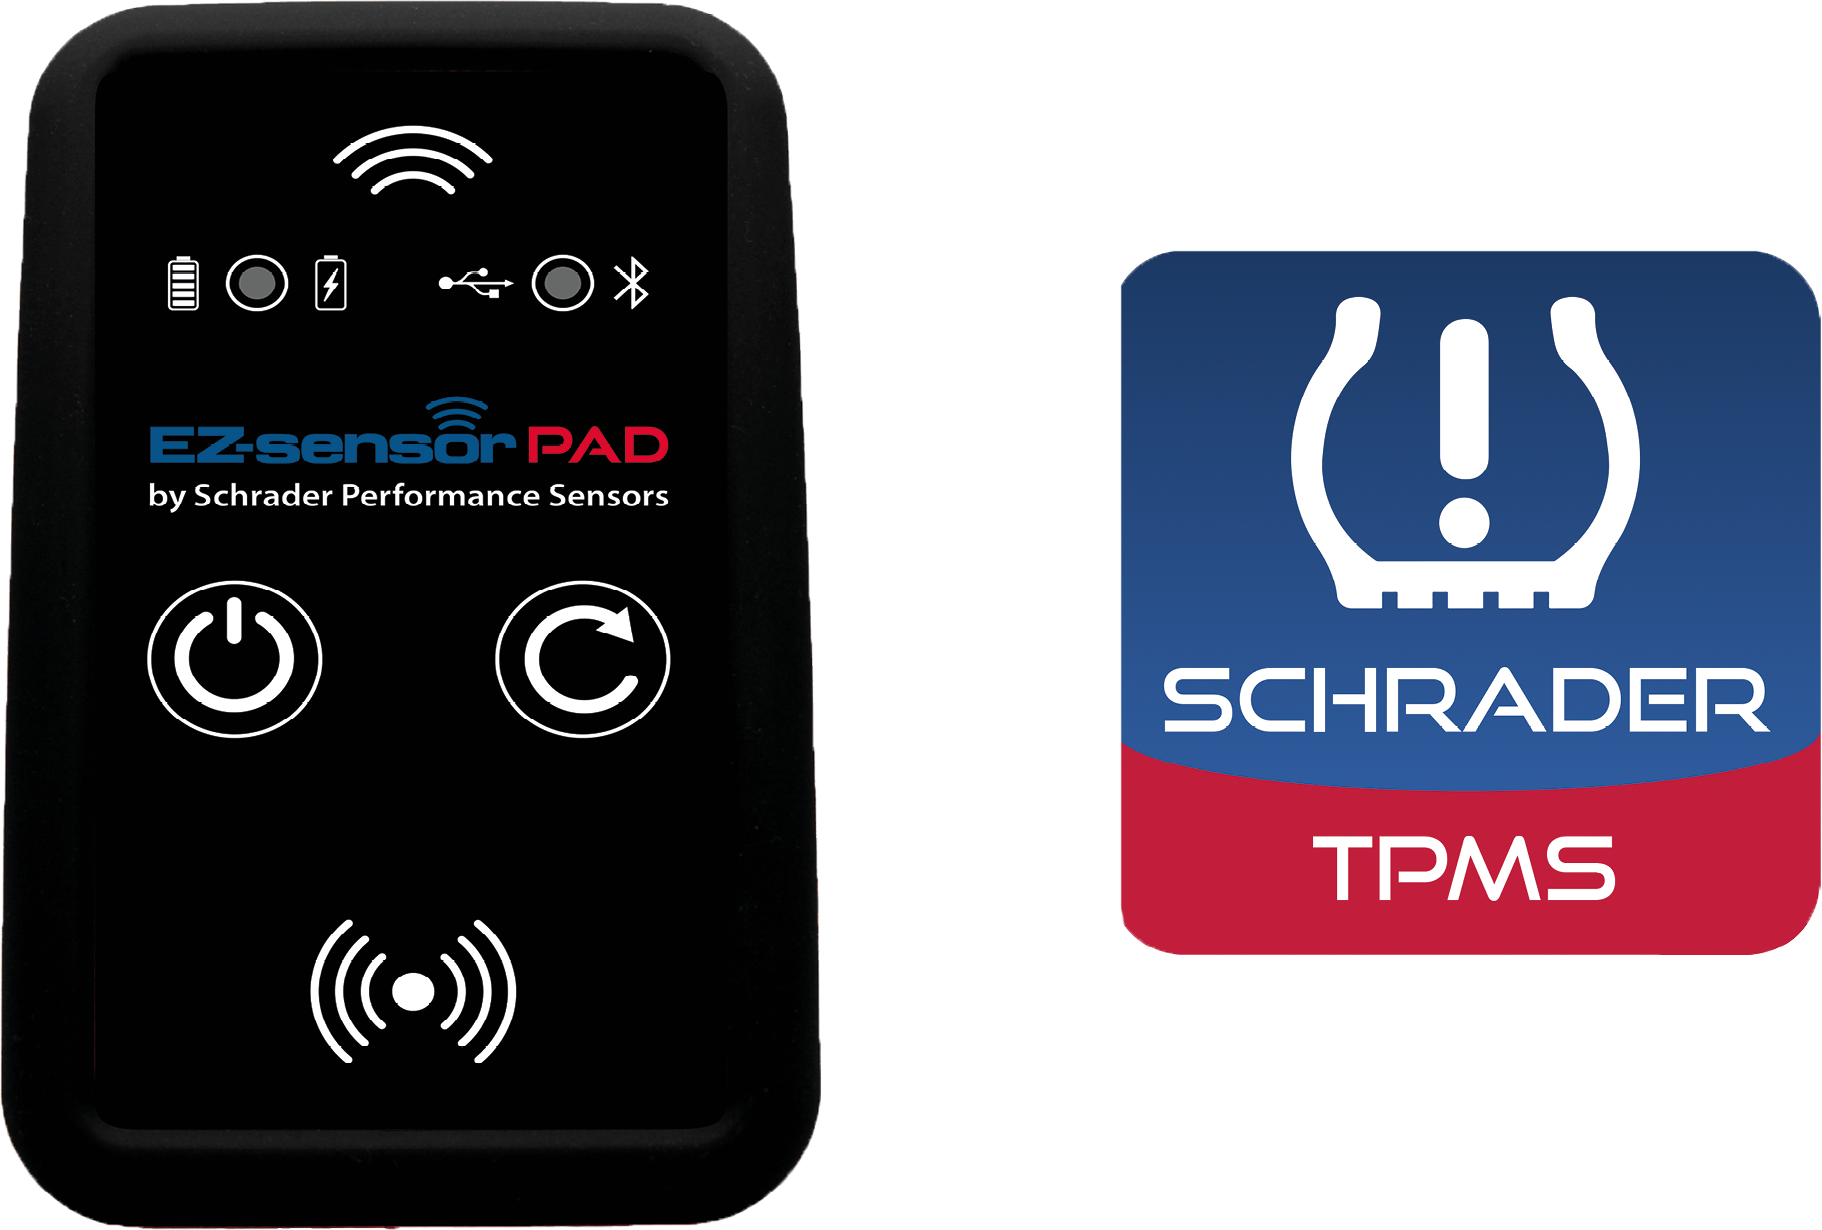 EZ-sensor PAD with Schrader TPMS APP